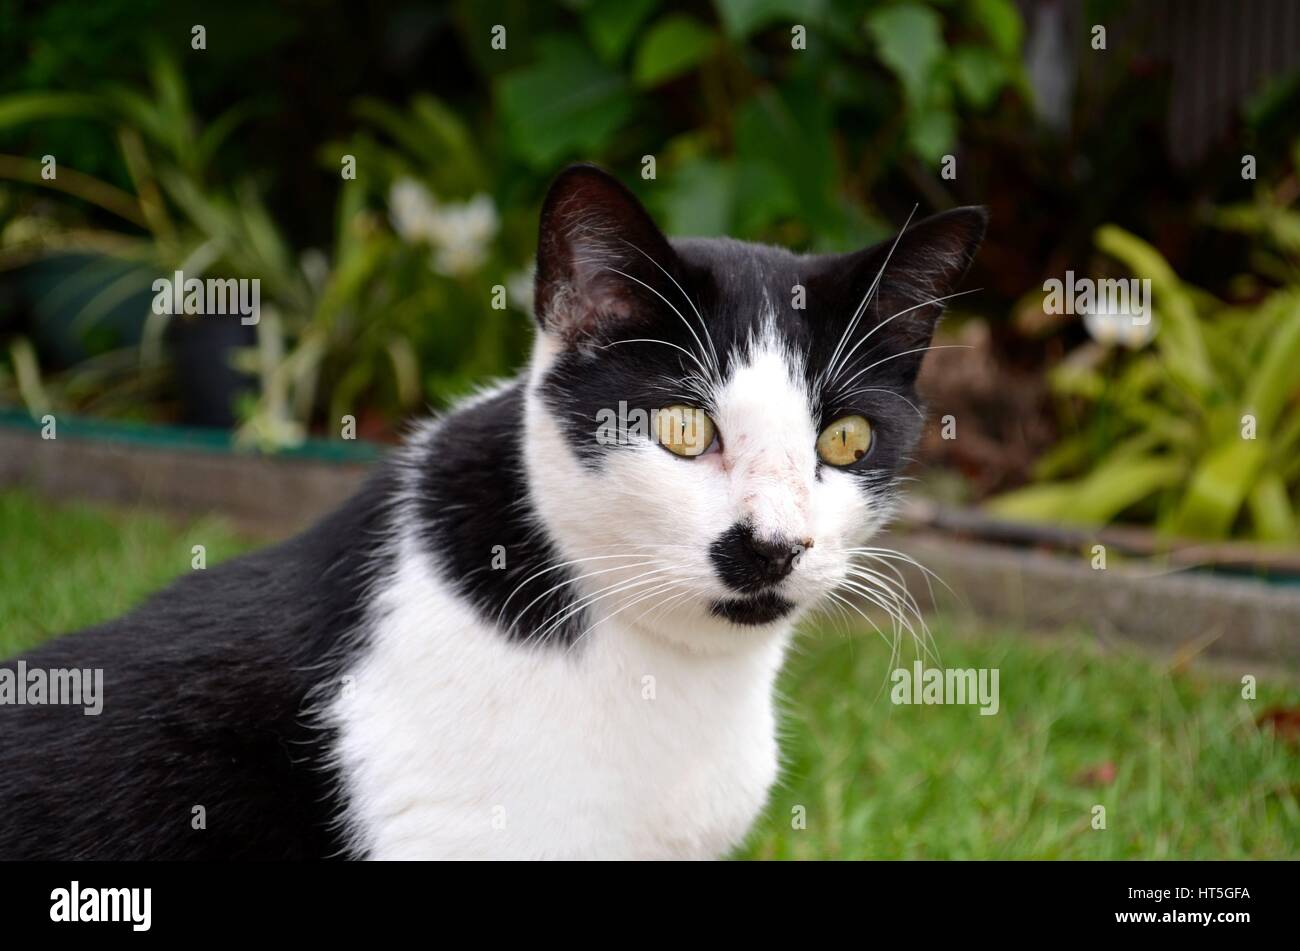 Big eyed black and white cat on full alert Stock Photo